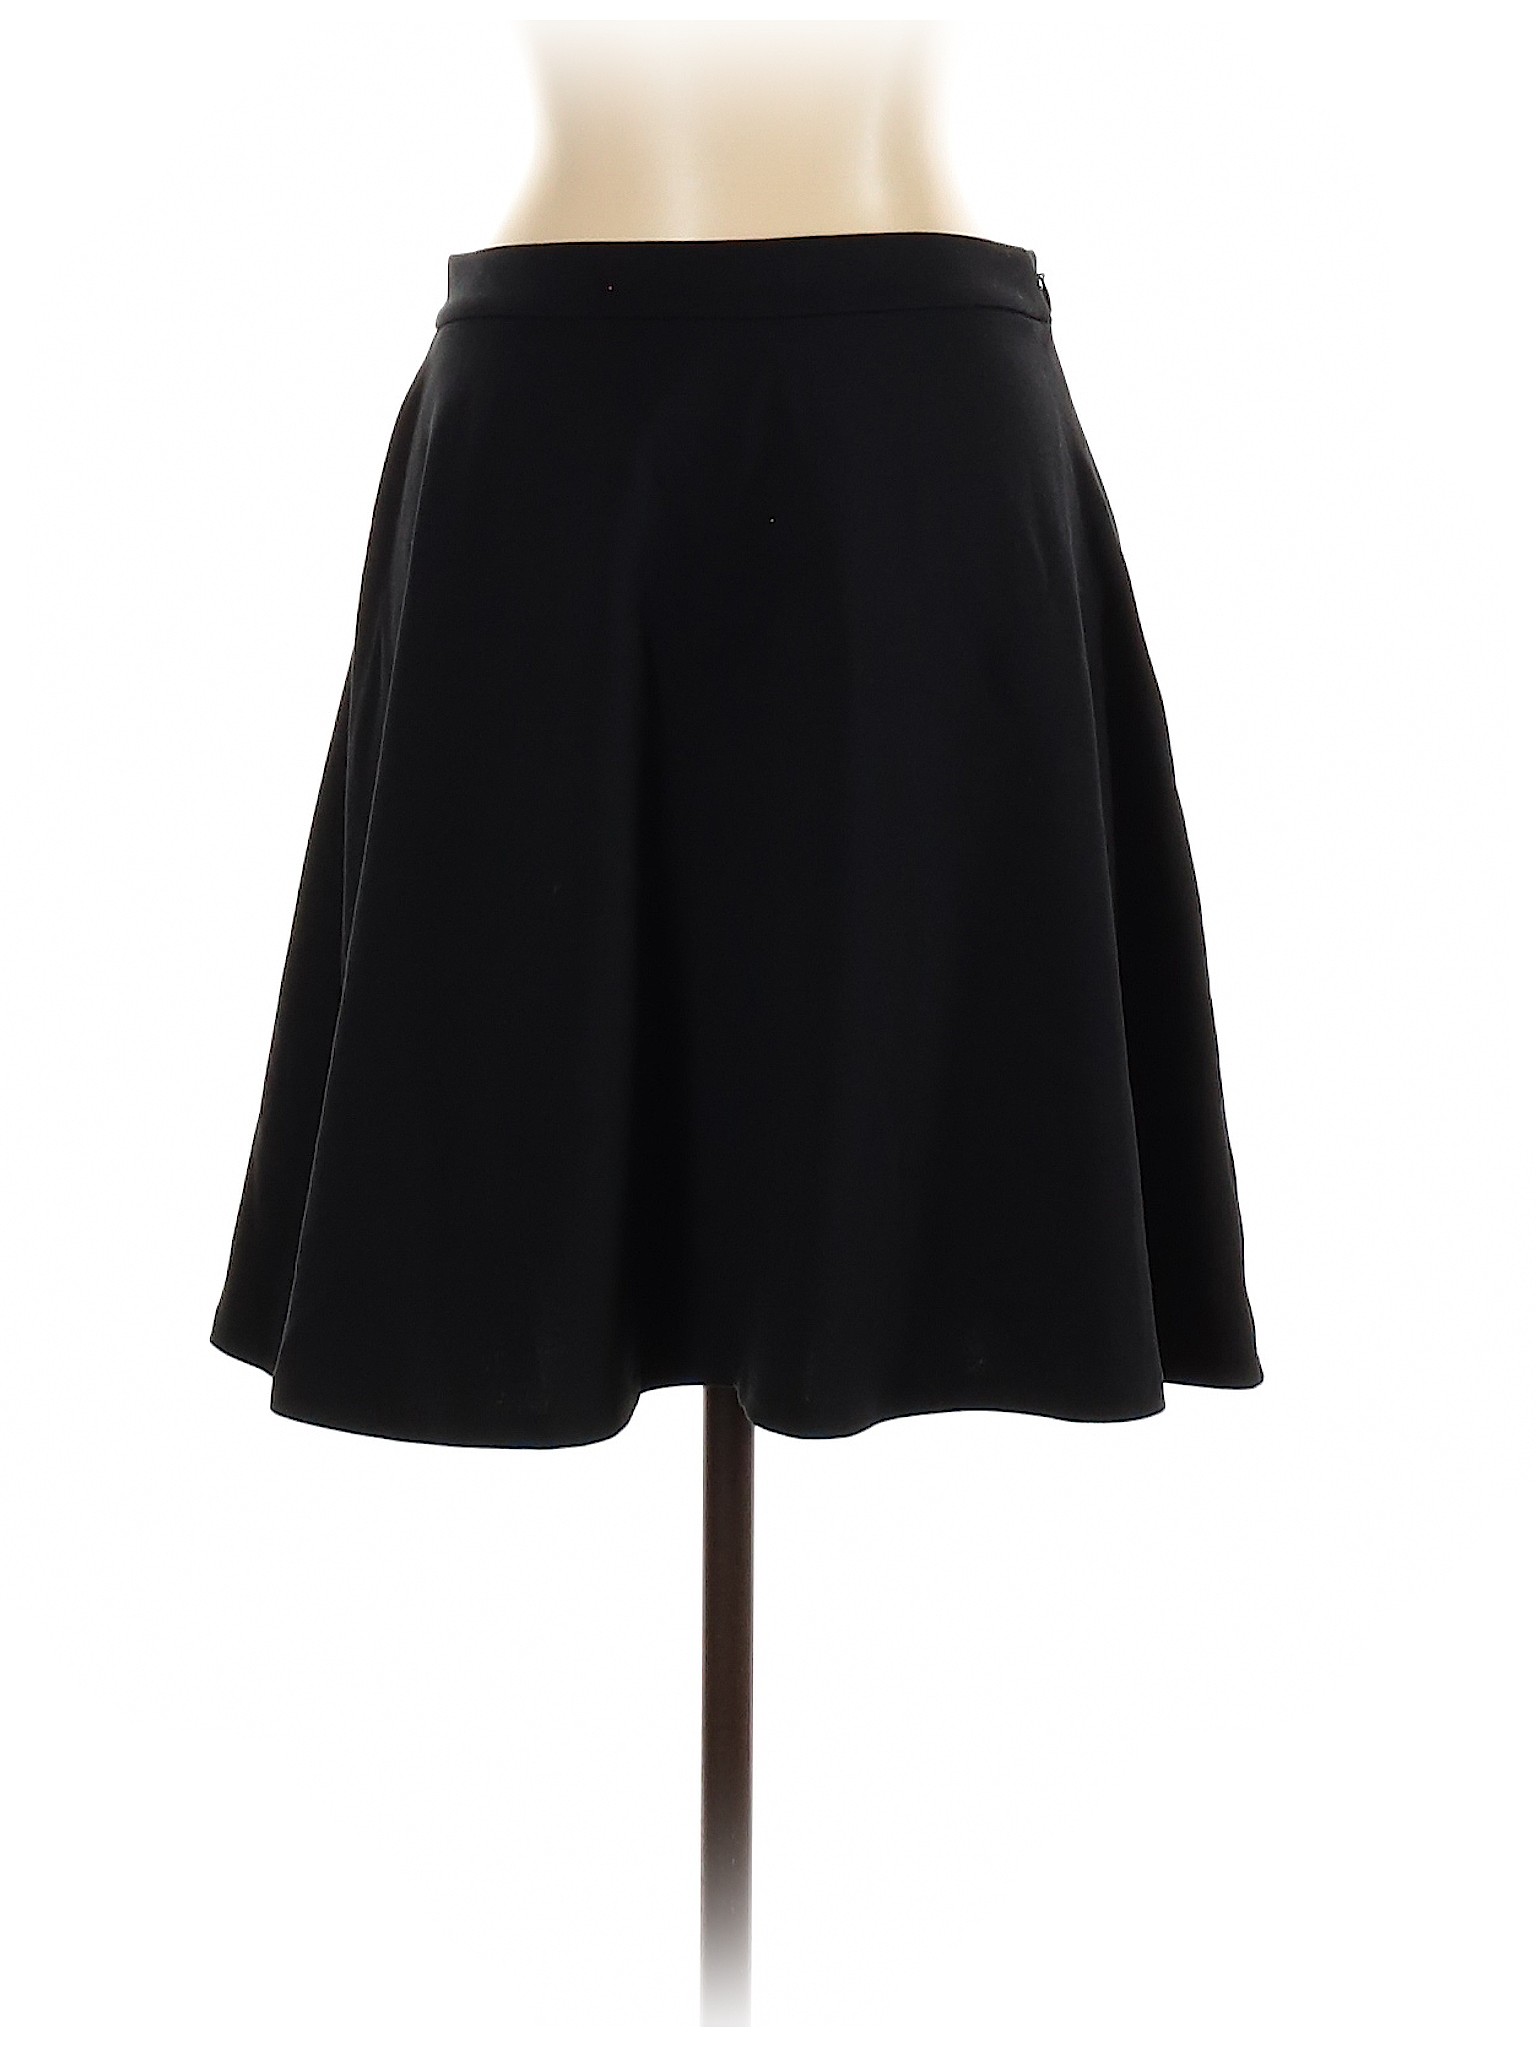 NWT Gap Women Black Casual Skirt XS | eBay